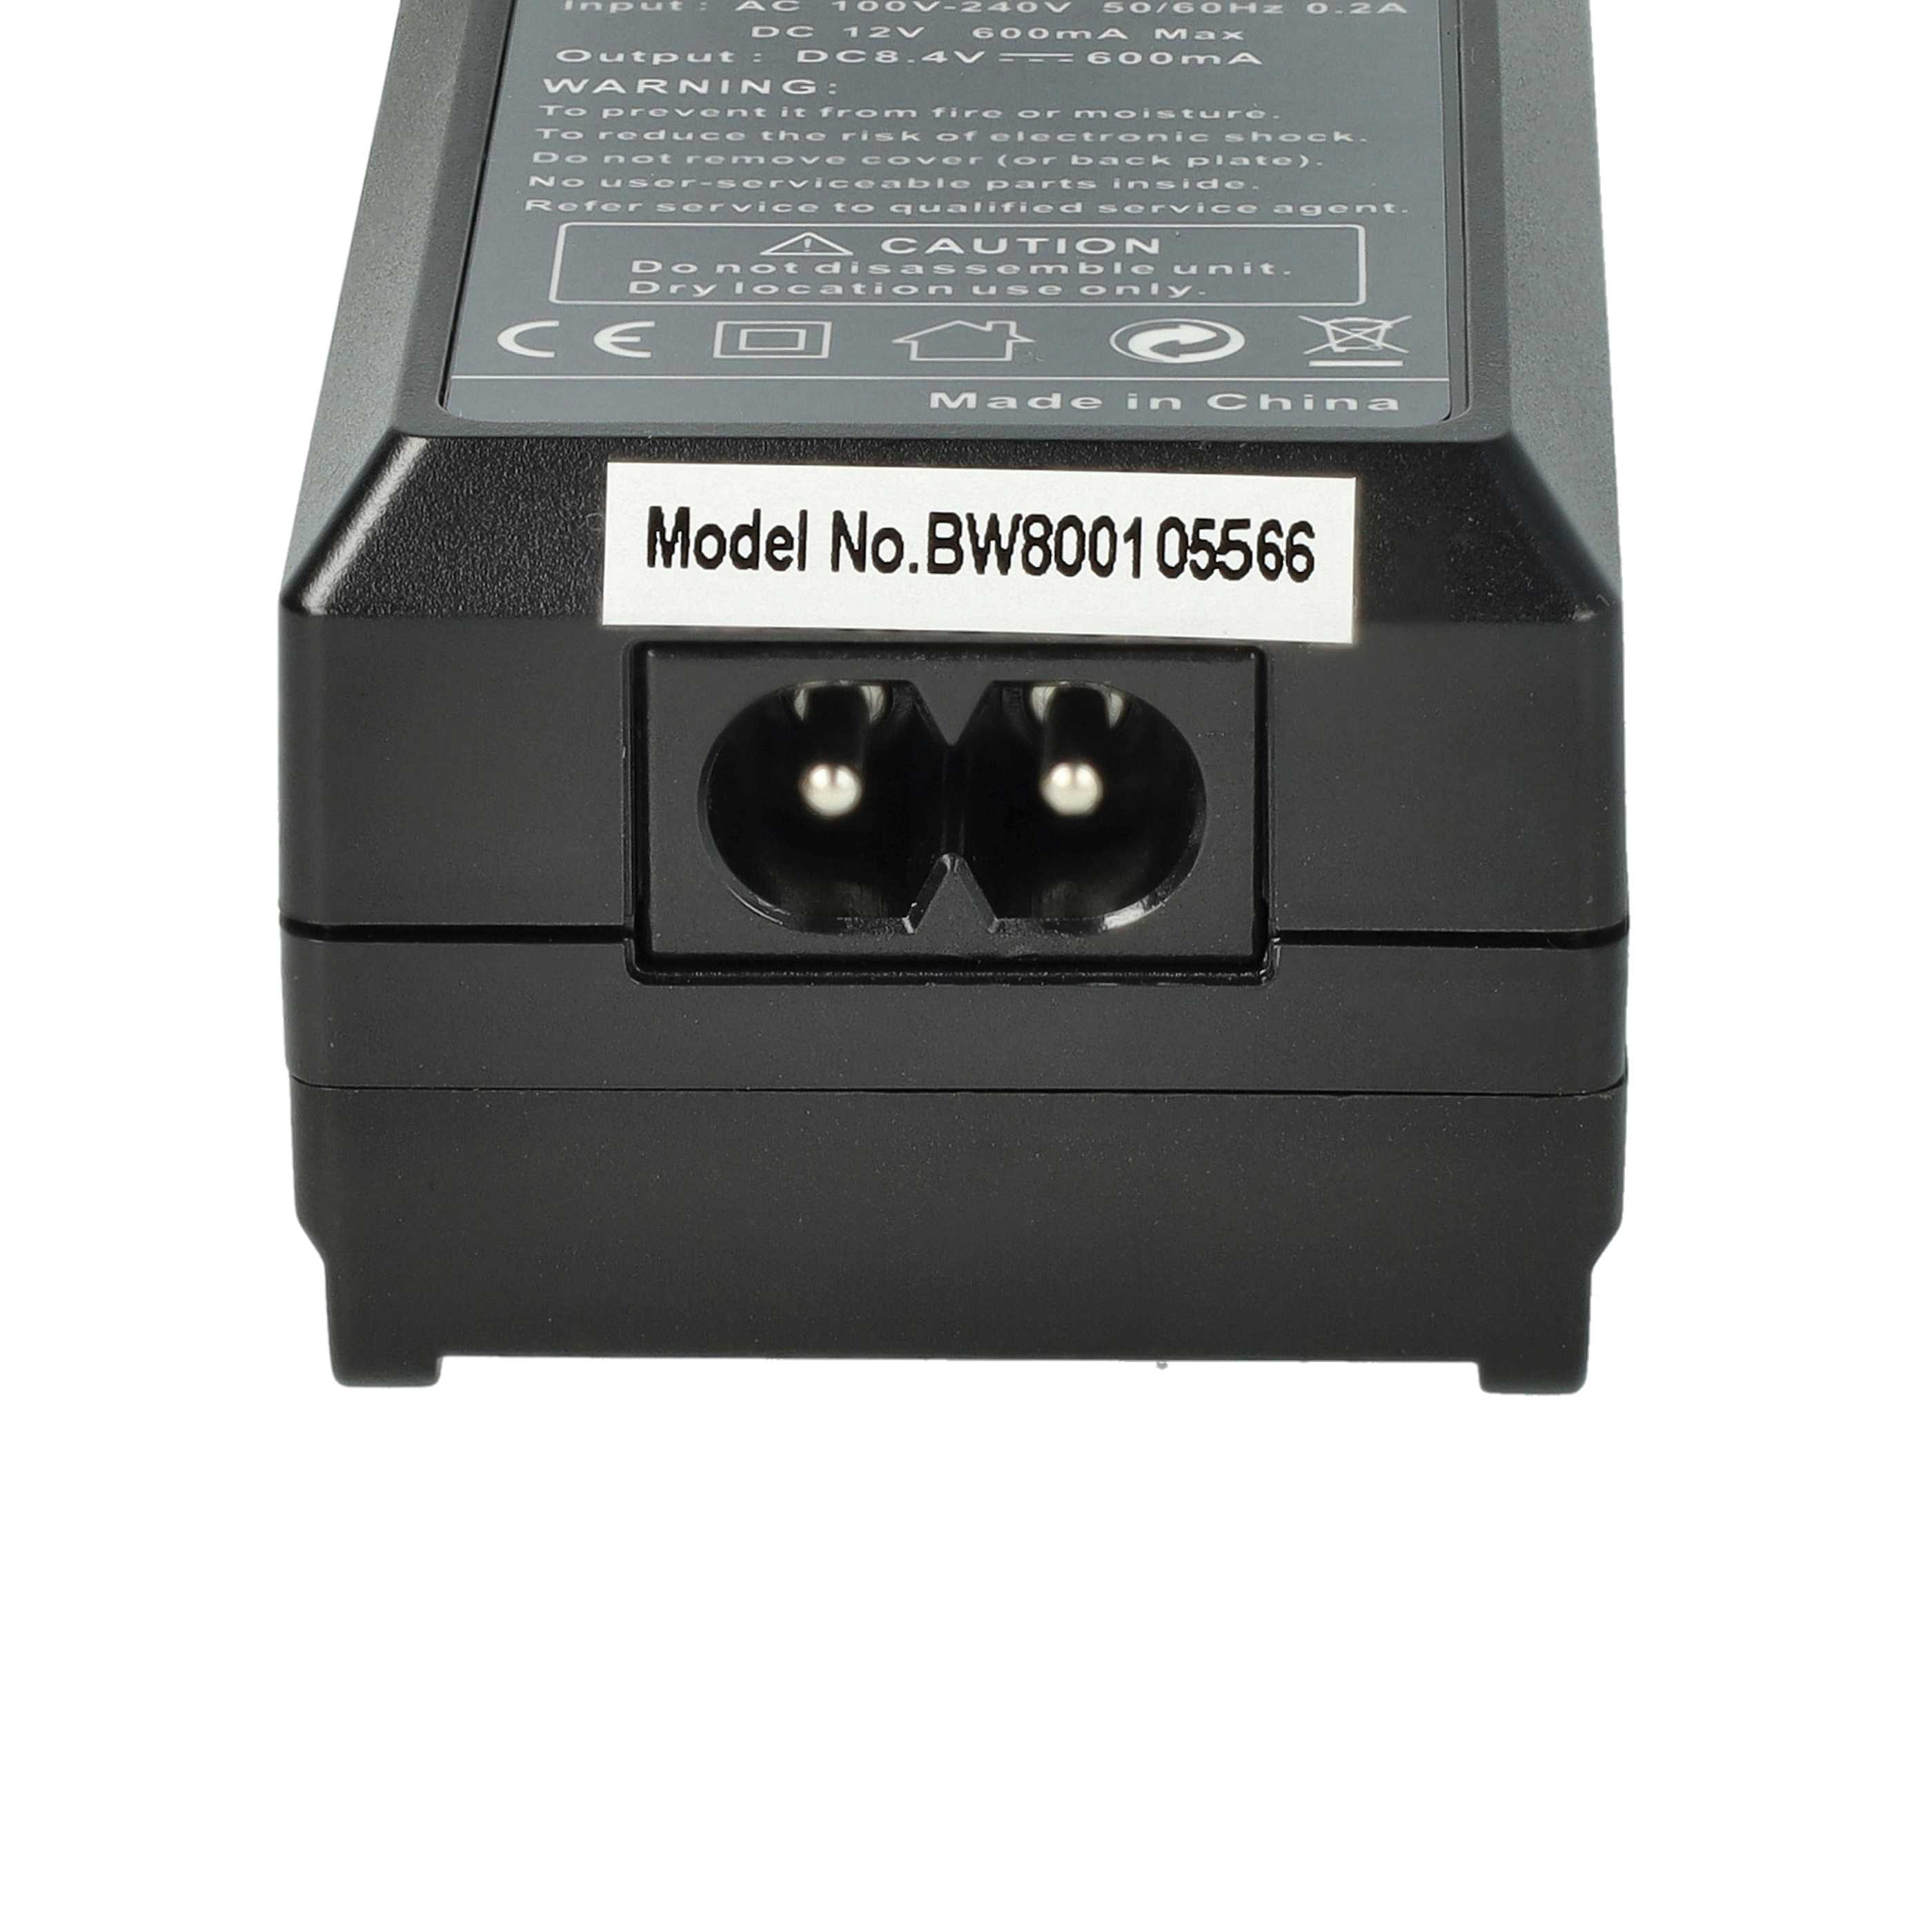 Ładowarka do aparatu Lumix DMC-LX15 i innych - ładowarka akumulatora 0,6 A, 8,4 V